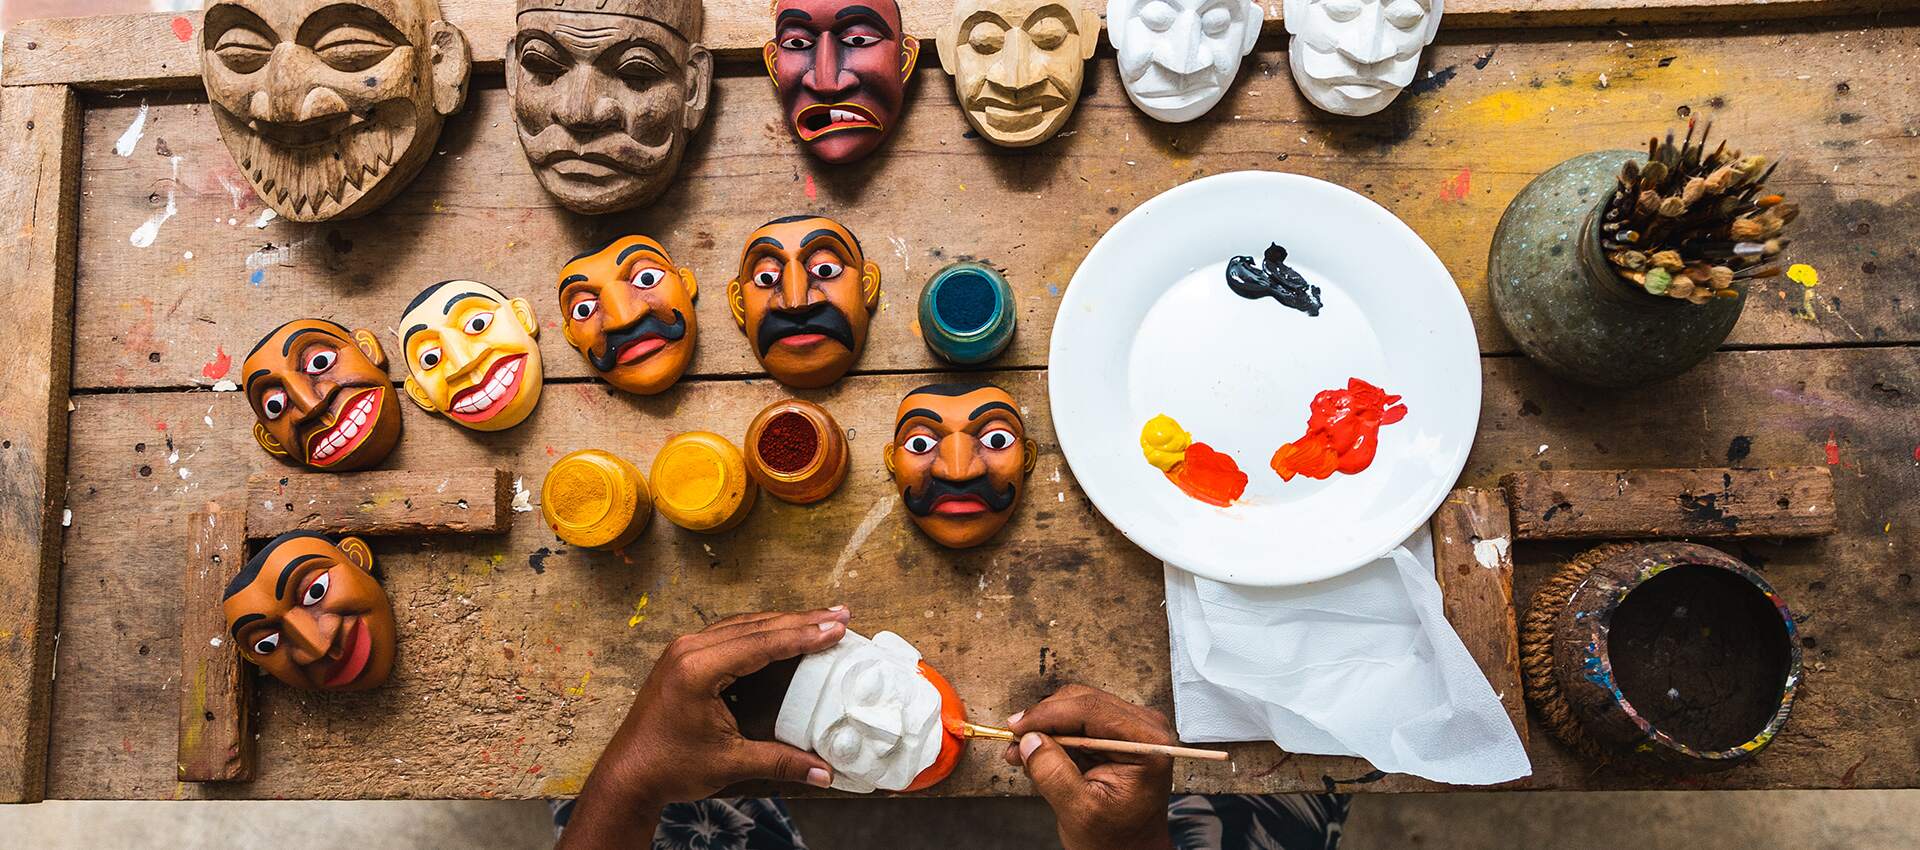 Make a Sri Lankan Mask